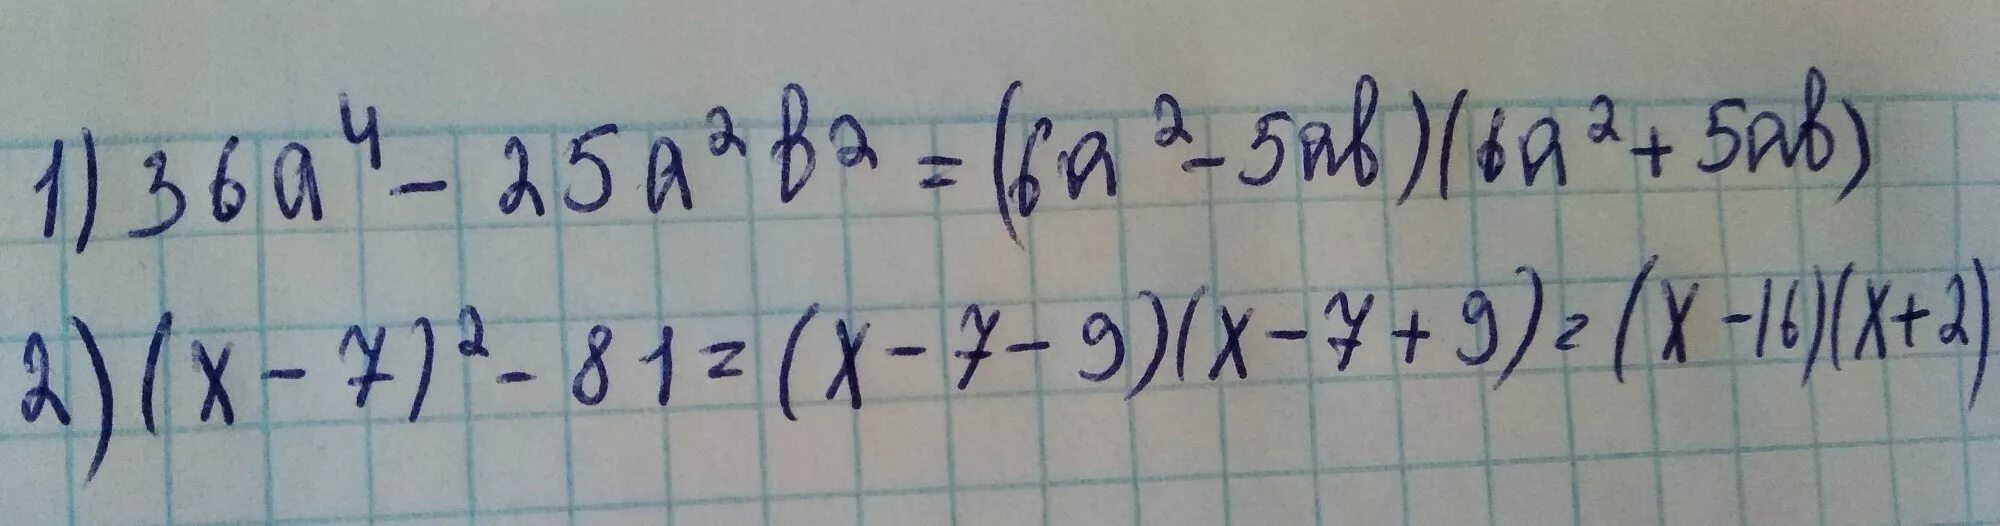 Разложить на множители 4 b 2. Разложите на множители а^25 +b^5. Разложите на множители b²-8. -25/36+У 2 разложите на множители. 81-(36-A)^2 разложить на множители.